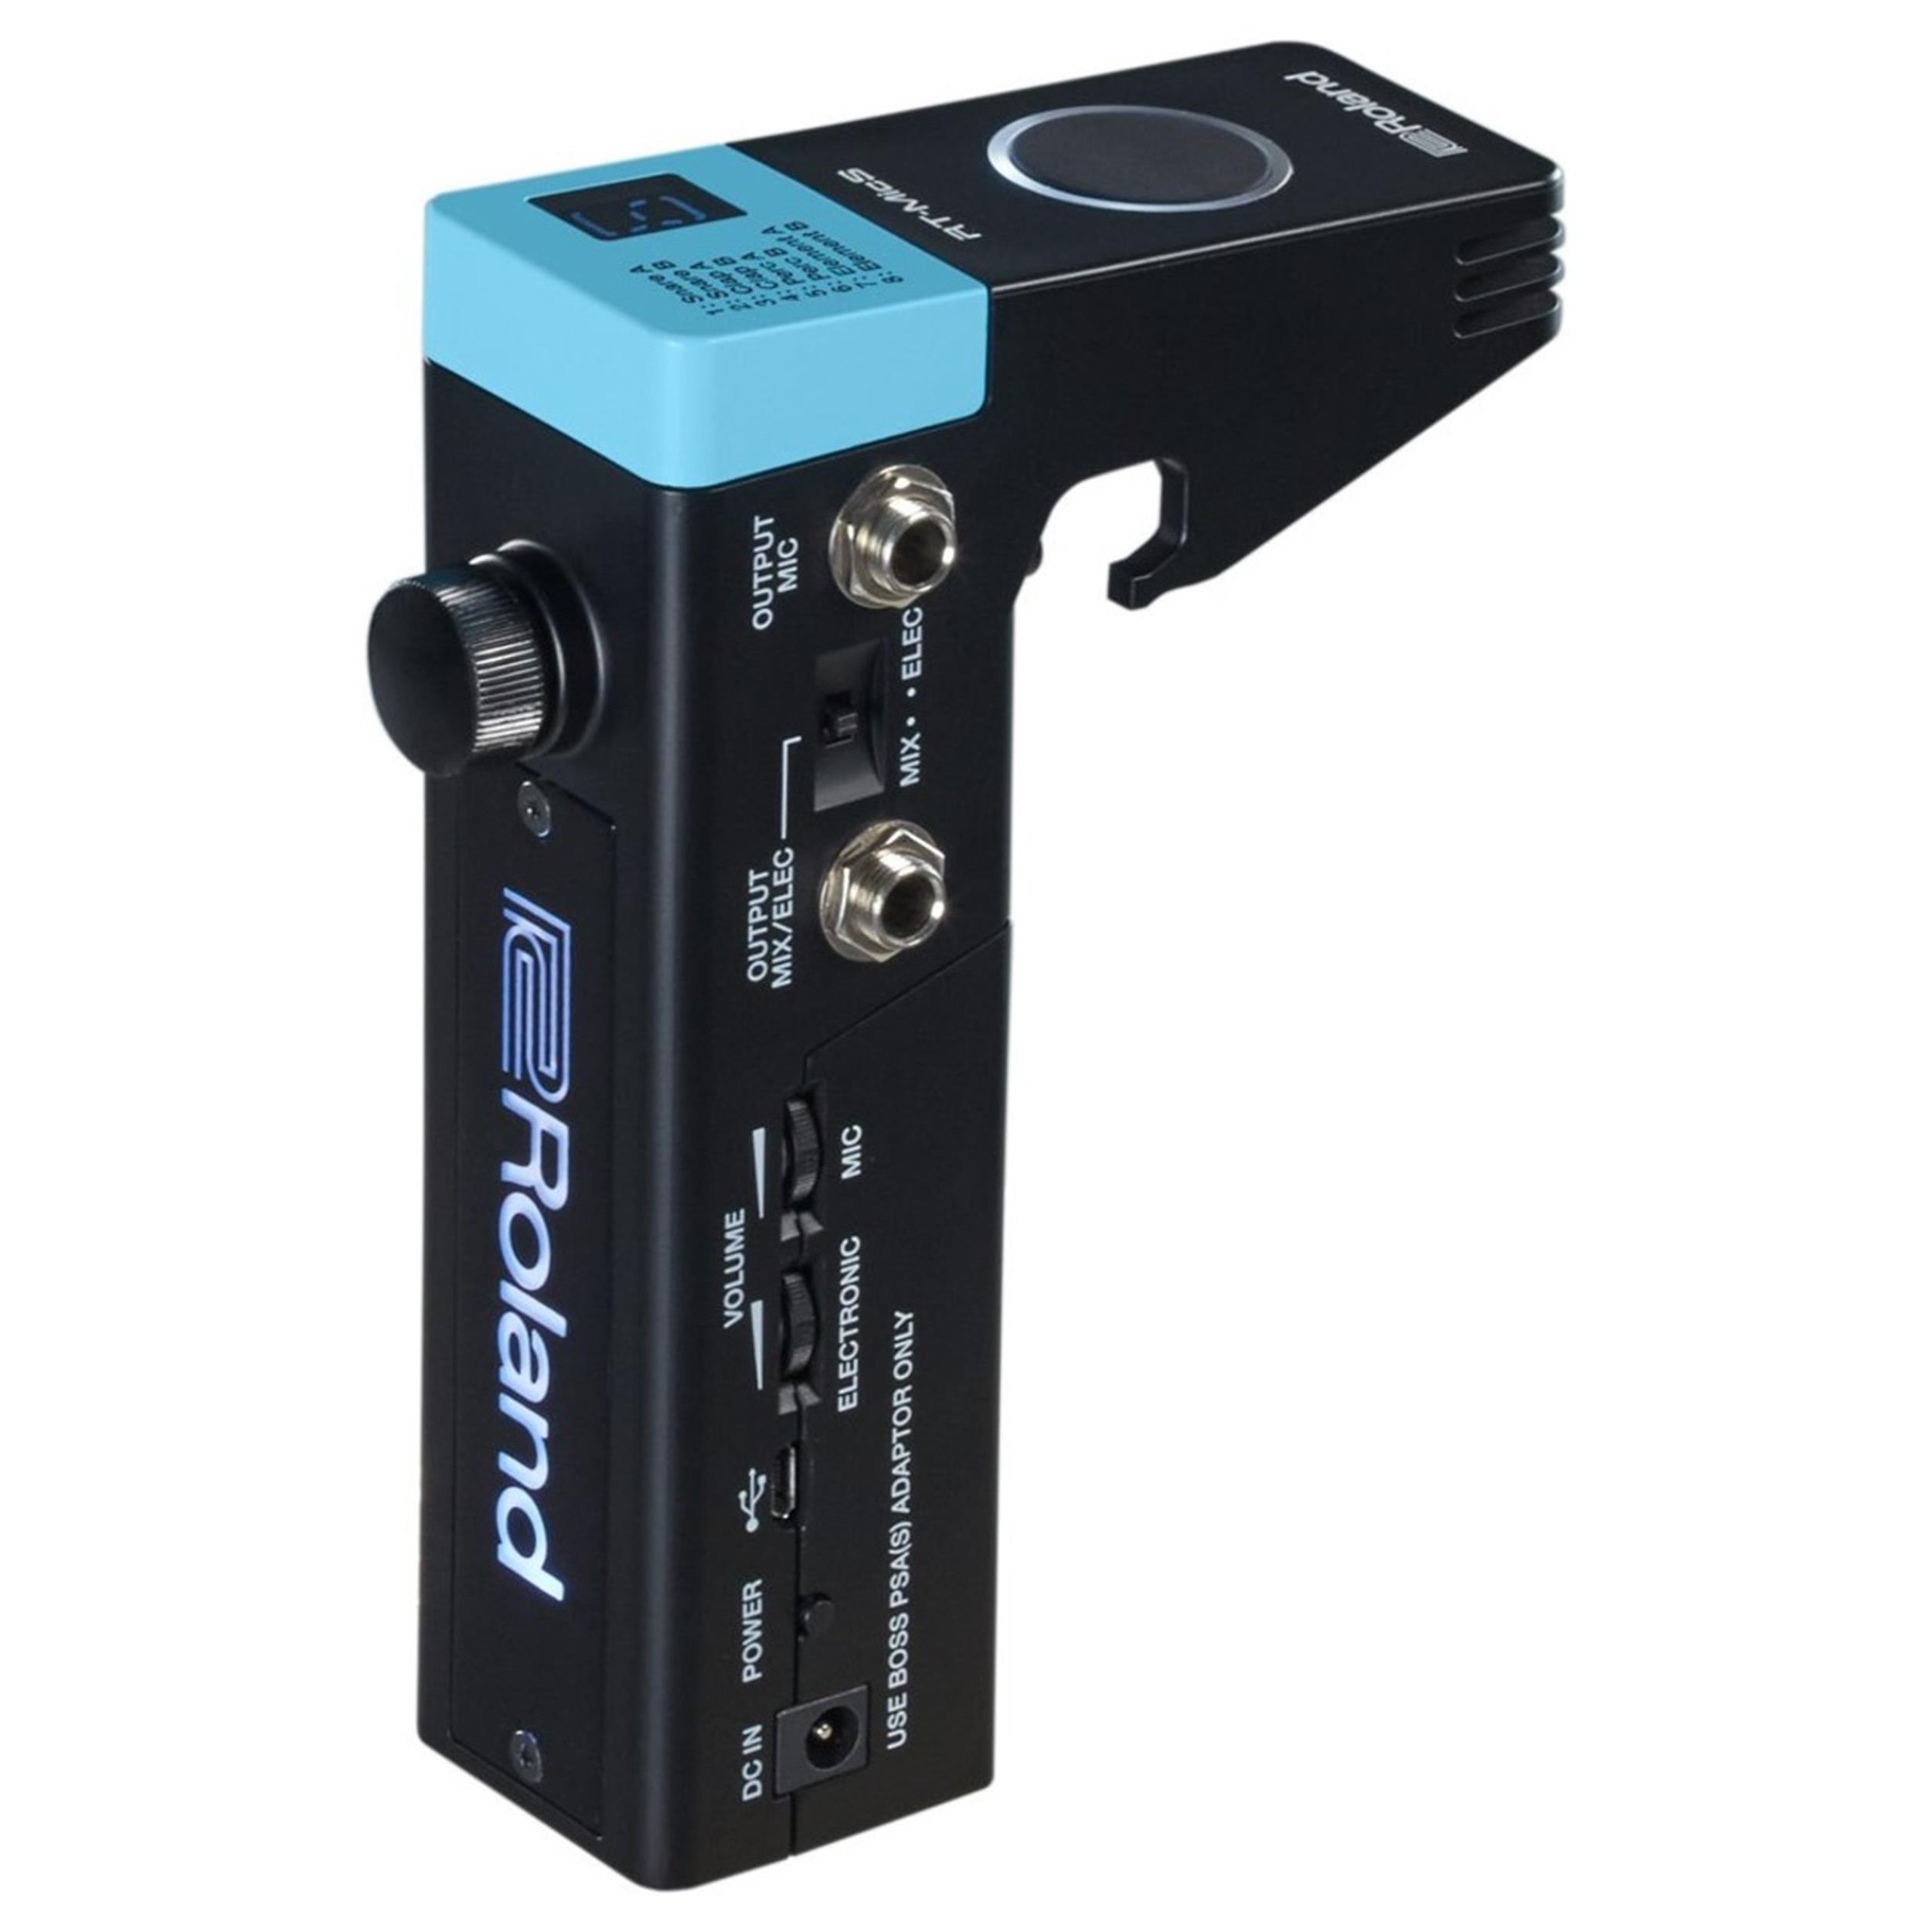 ROLAND RT-MICS hybrid drum trigger mic and module - Batterie / Percussioni Microfoni Per Batteria